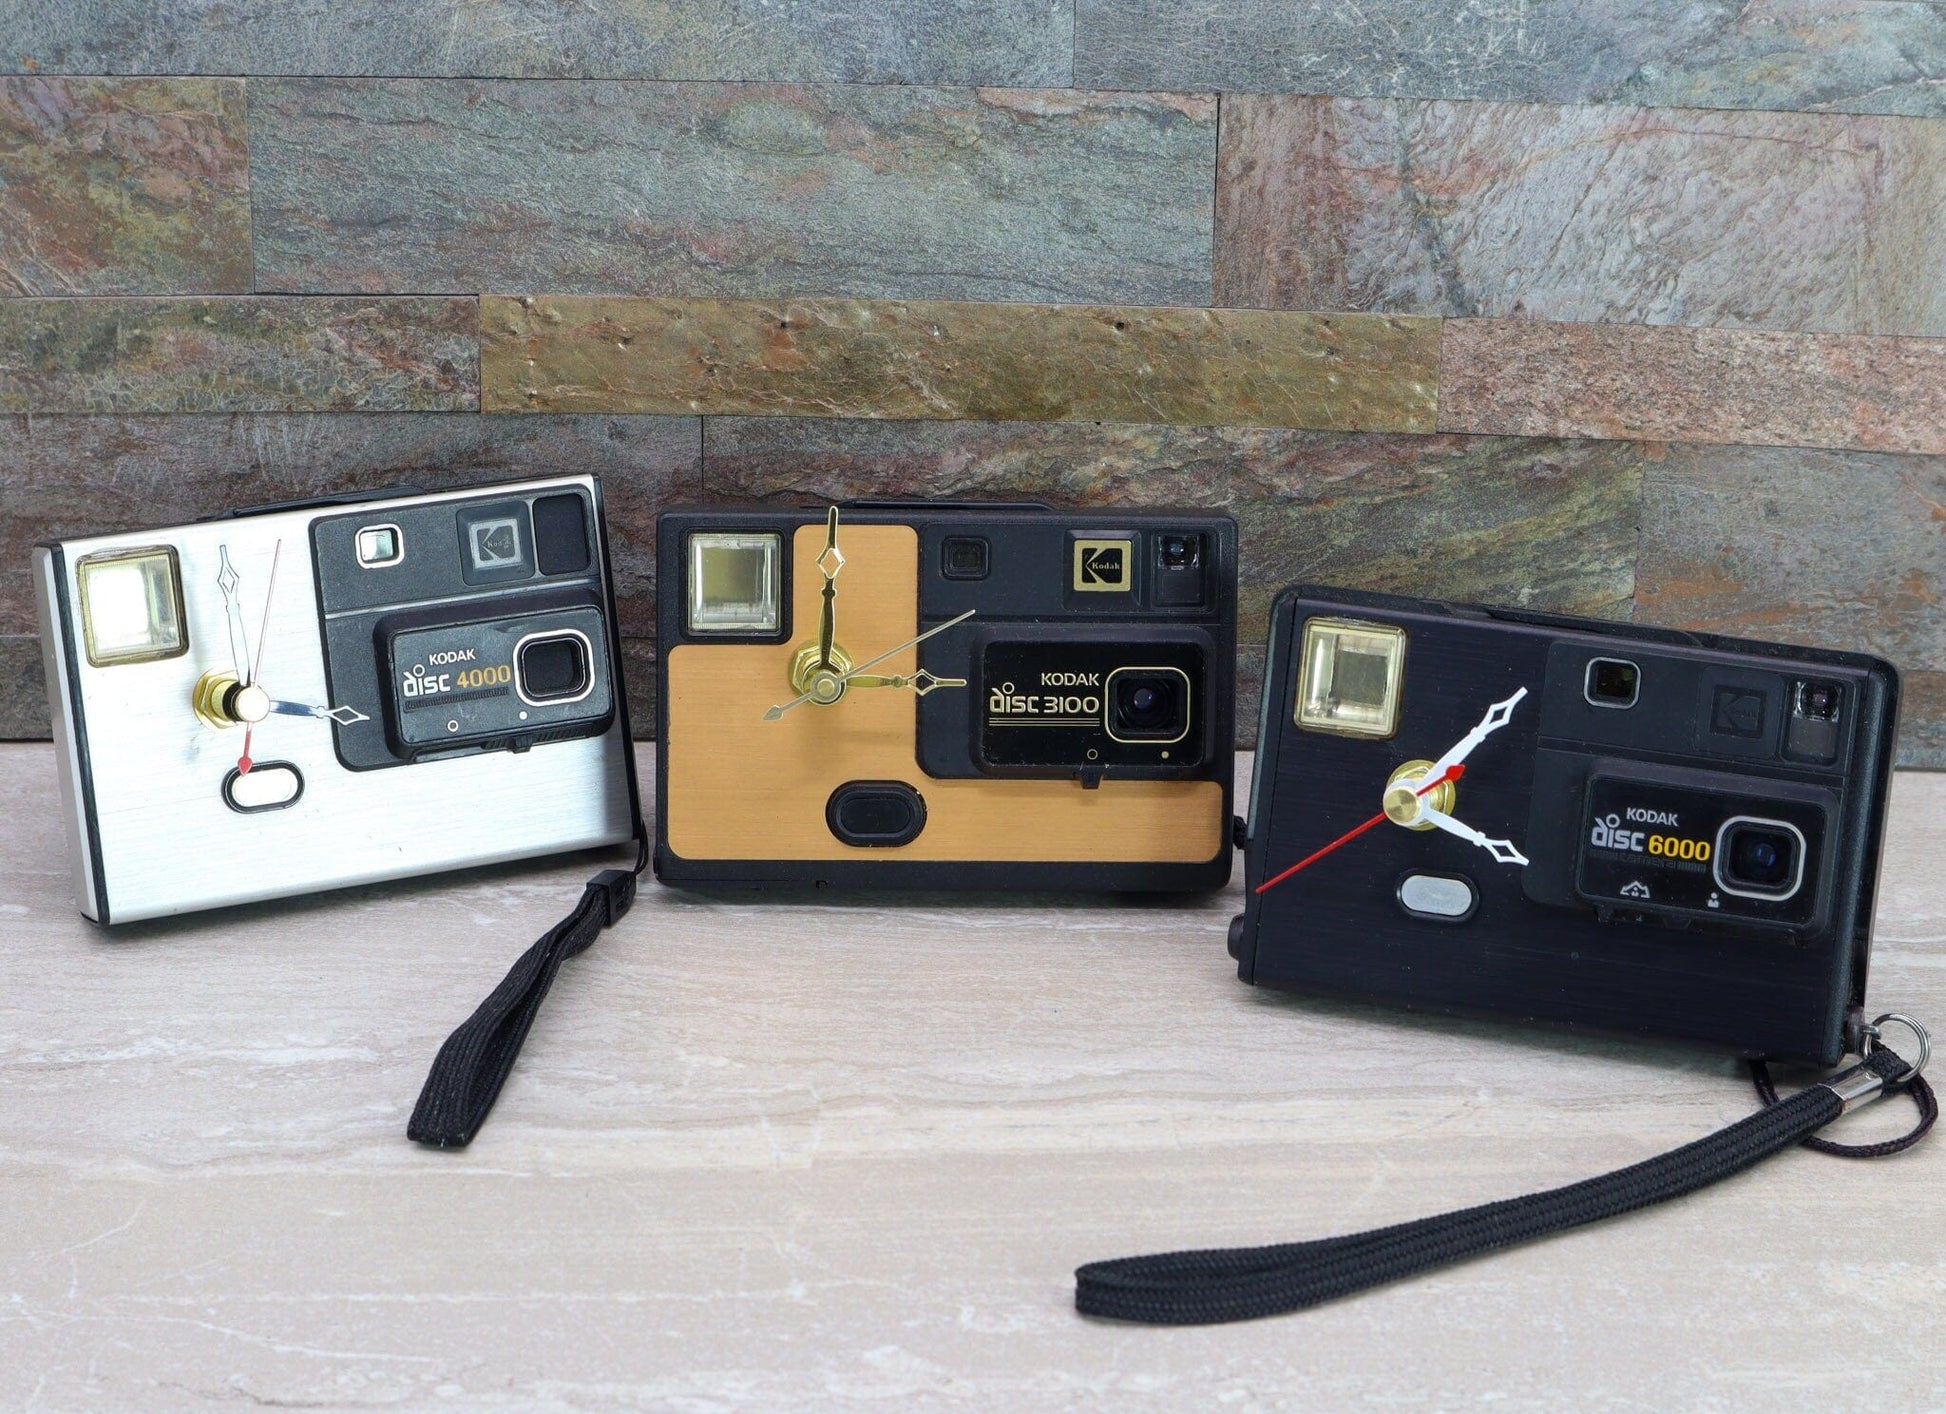 LightAndTimeArt Camera clocks Back to the golden 80s - Kodak Disc 8000 -  Camera Clock